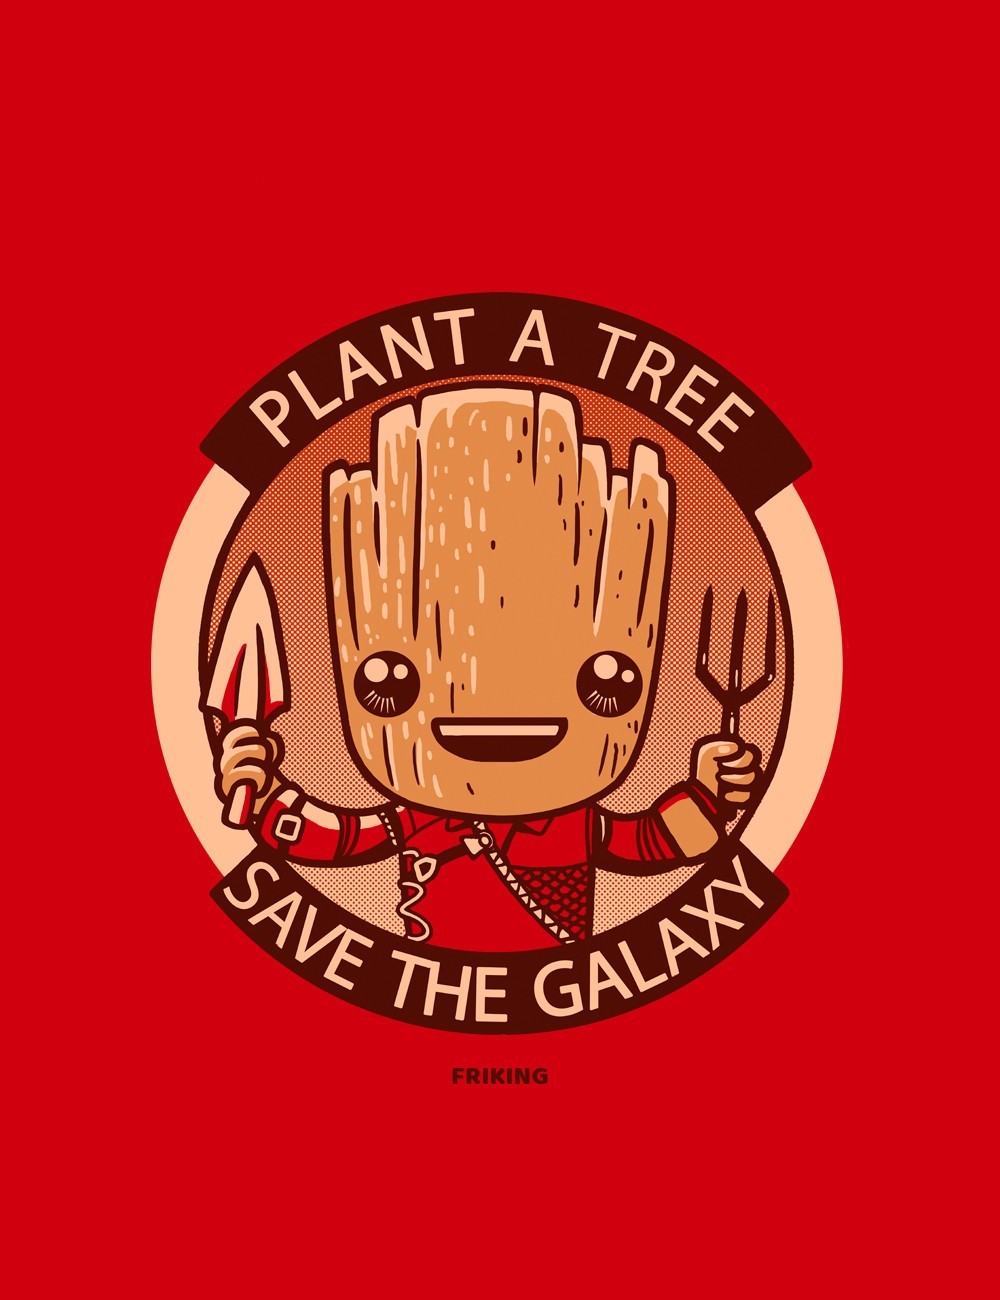  Save the galaxy 